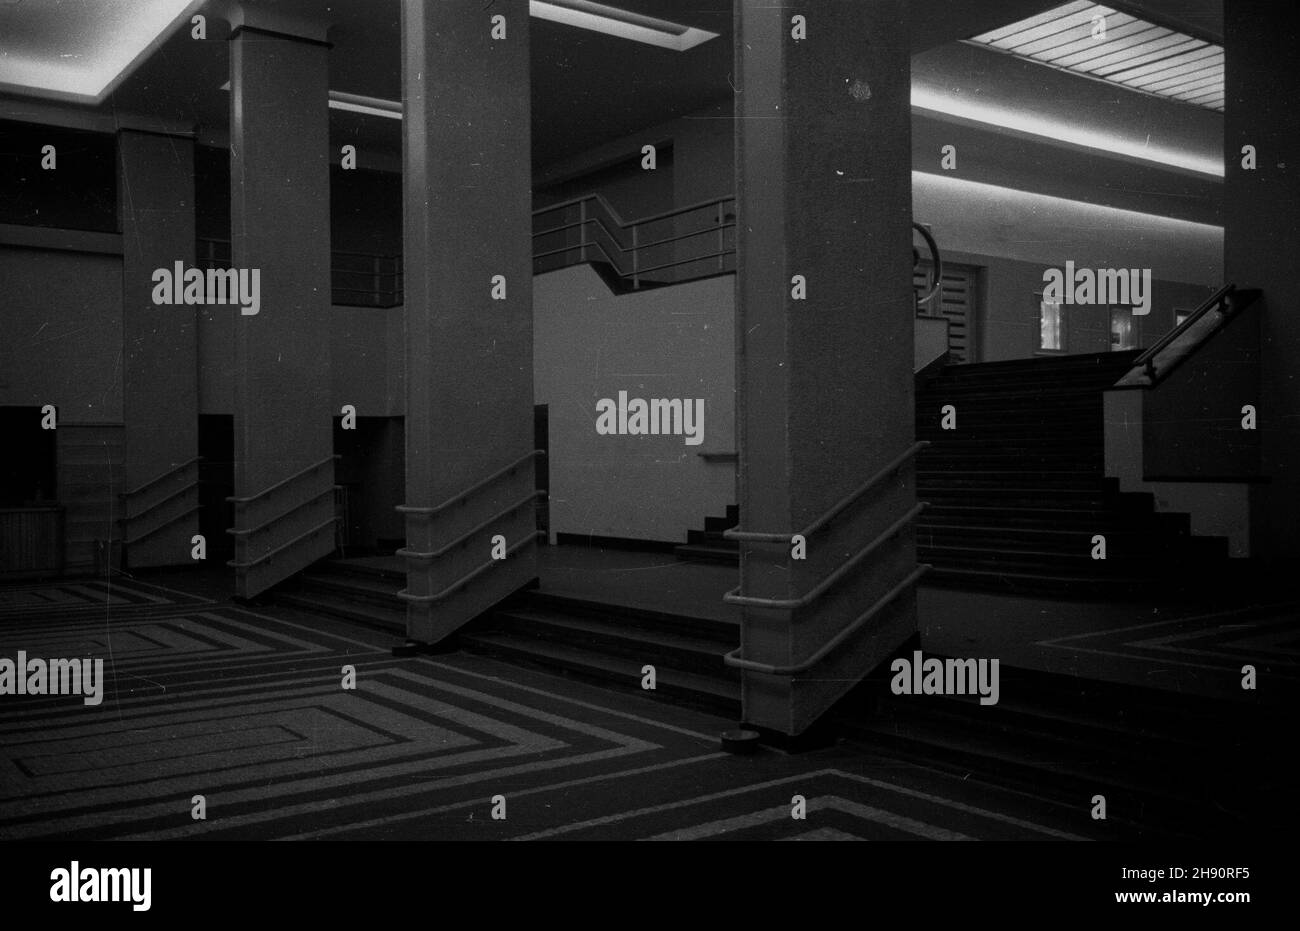 Palladium Cinema High Resolution Stock Photography and Images - Alamy